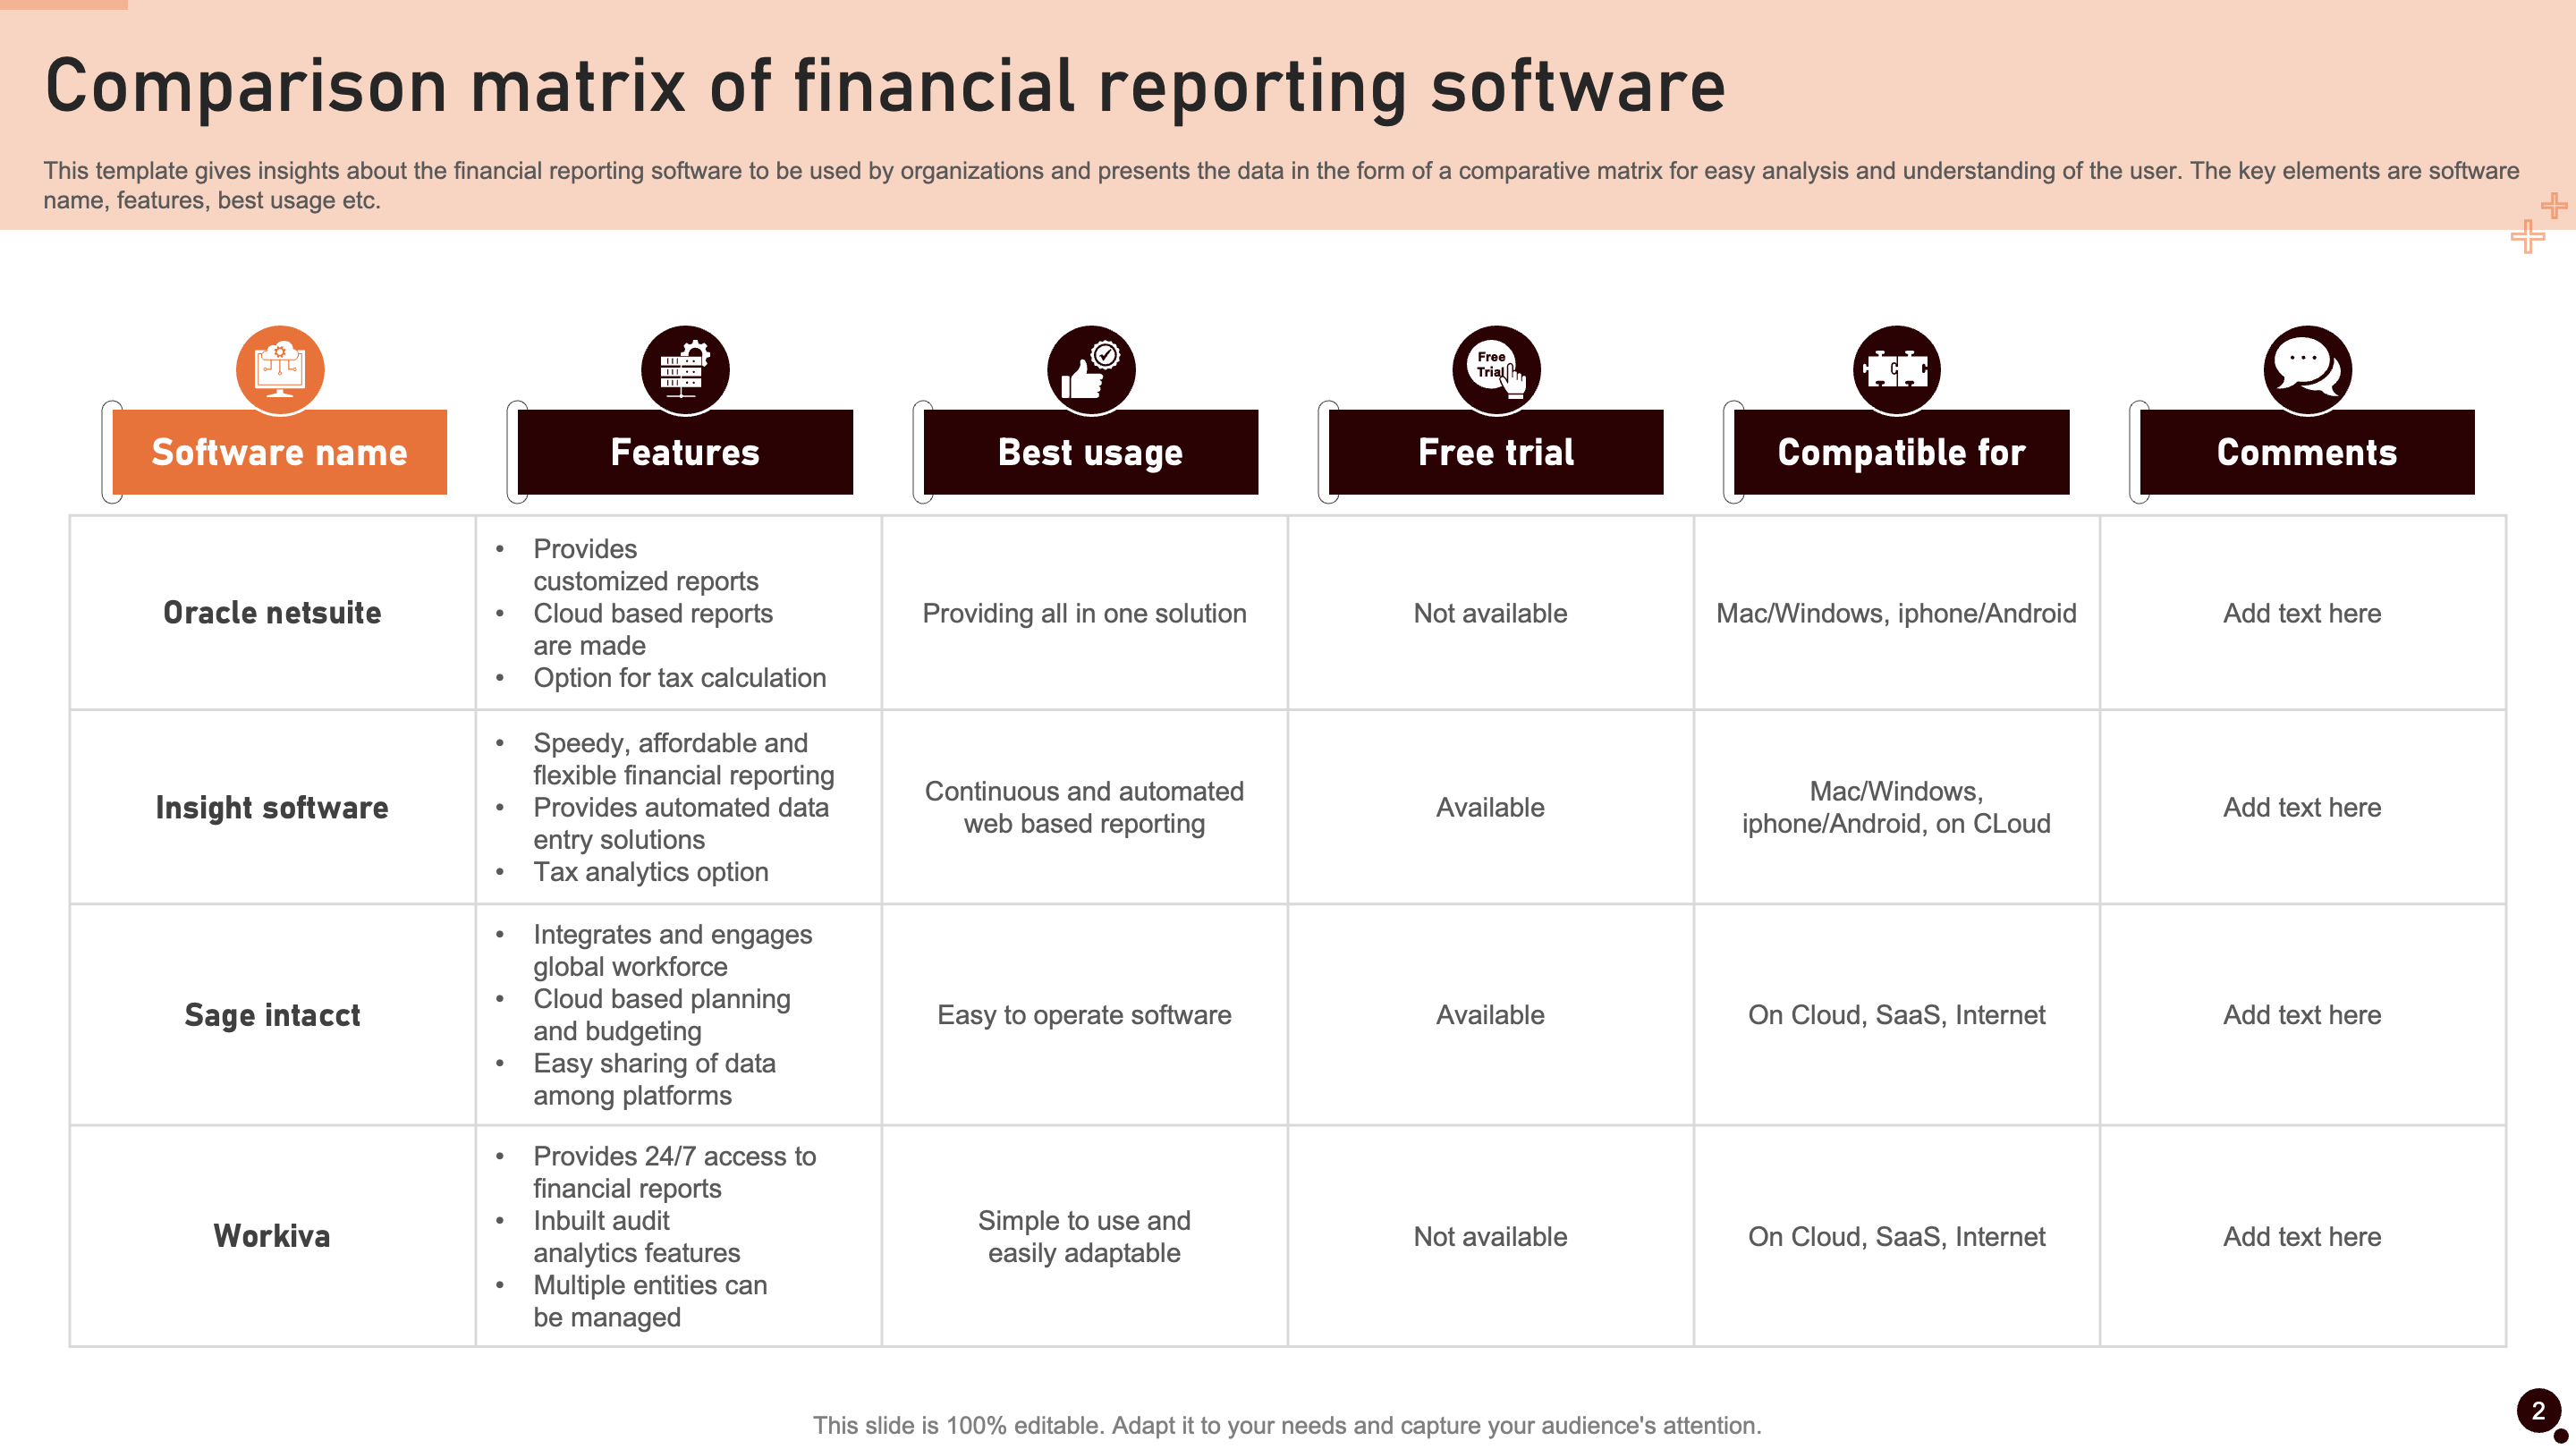 Comparison Matrix of Financial Reporting Software